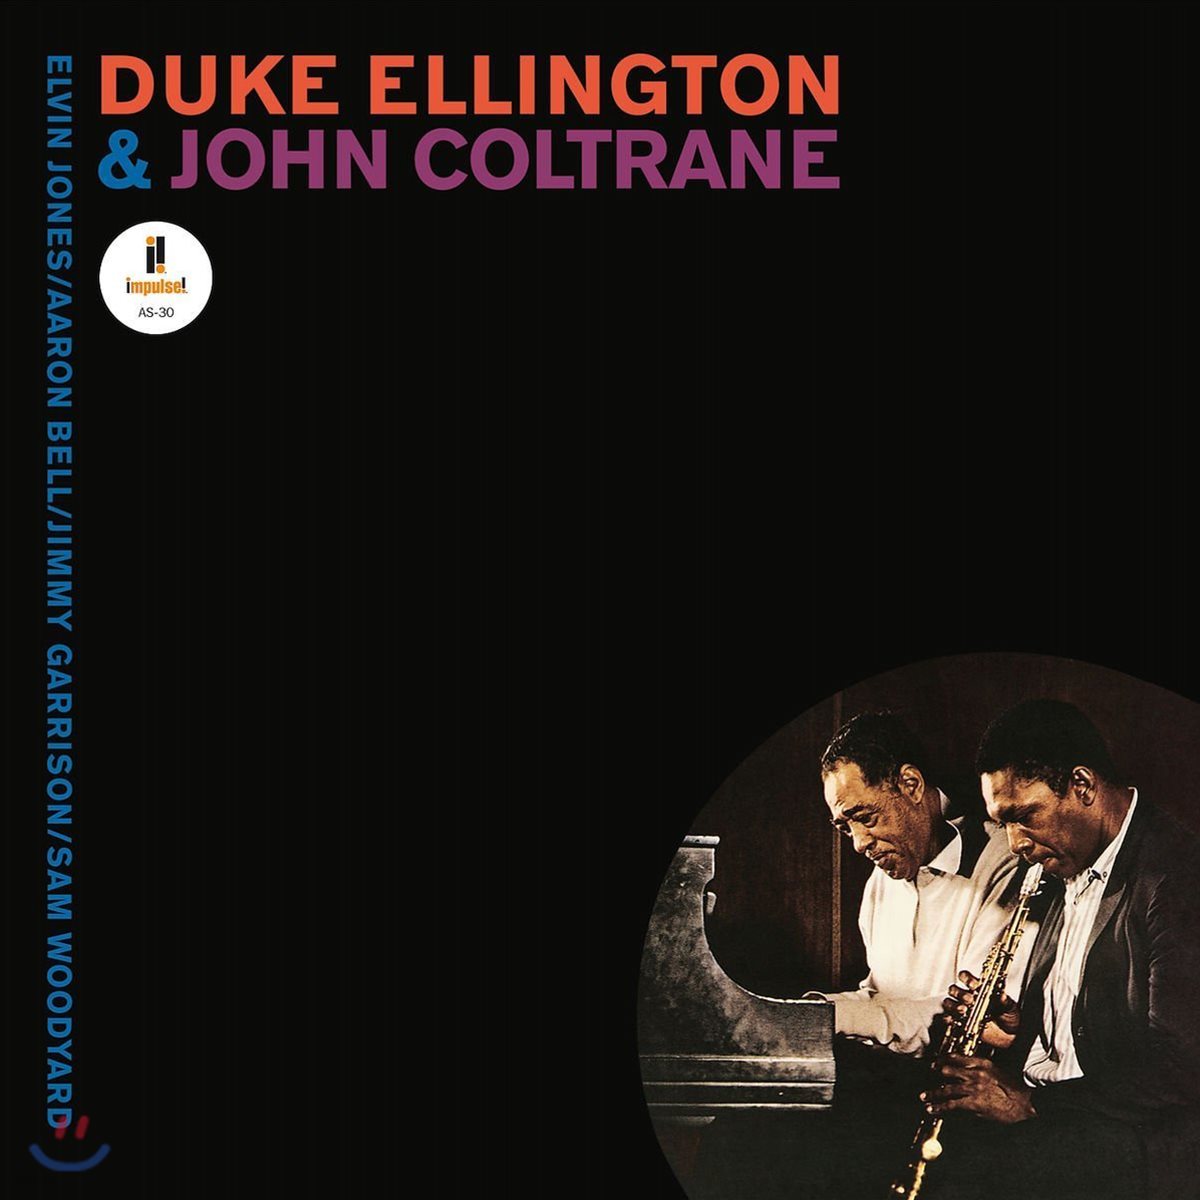 Duke Ellington & John Coltrane (듀크 엘링턴 & 존 콜트레인) - Duke Ellington & John Coltrane [투명 퍼플 컬러 LP]